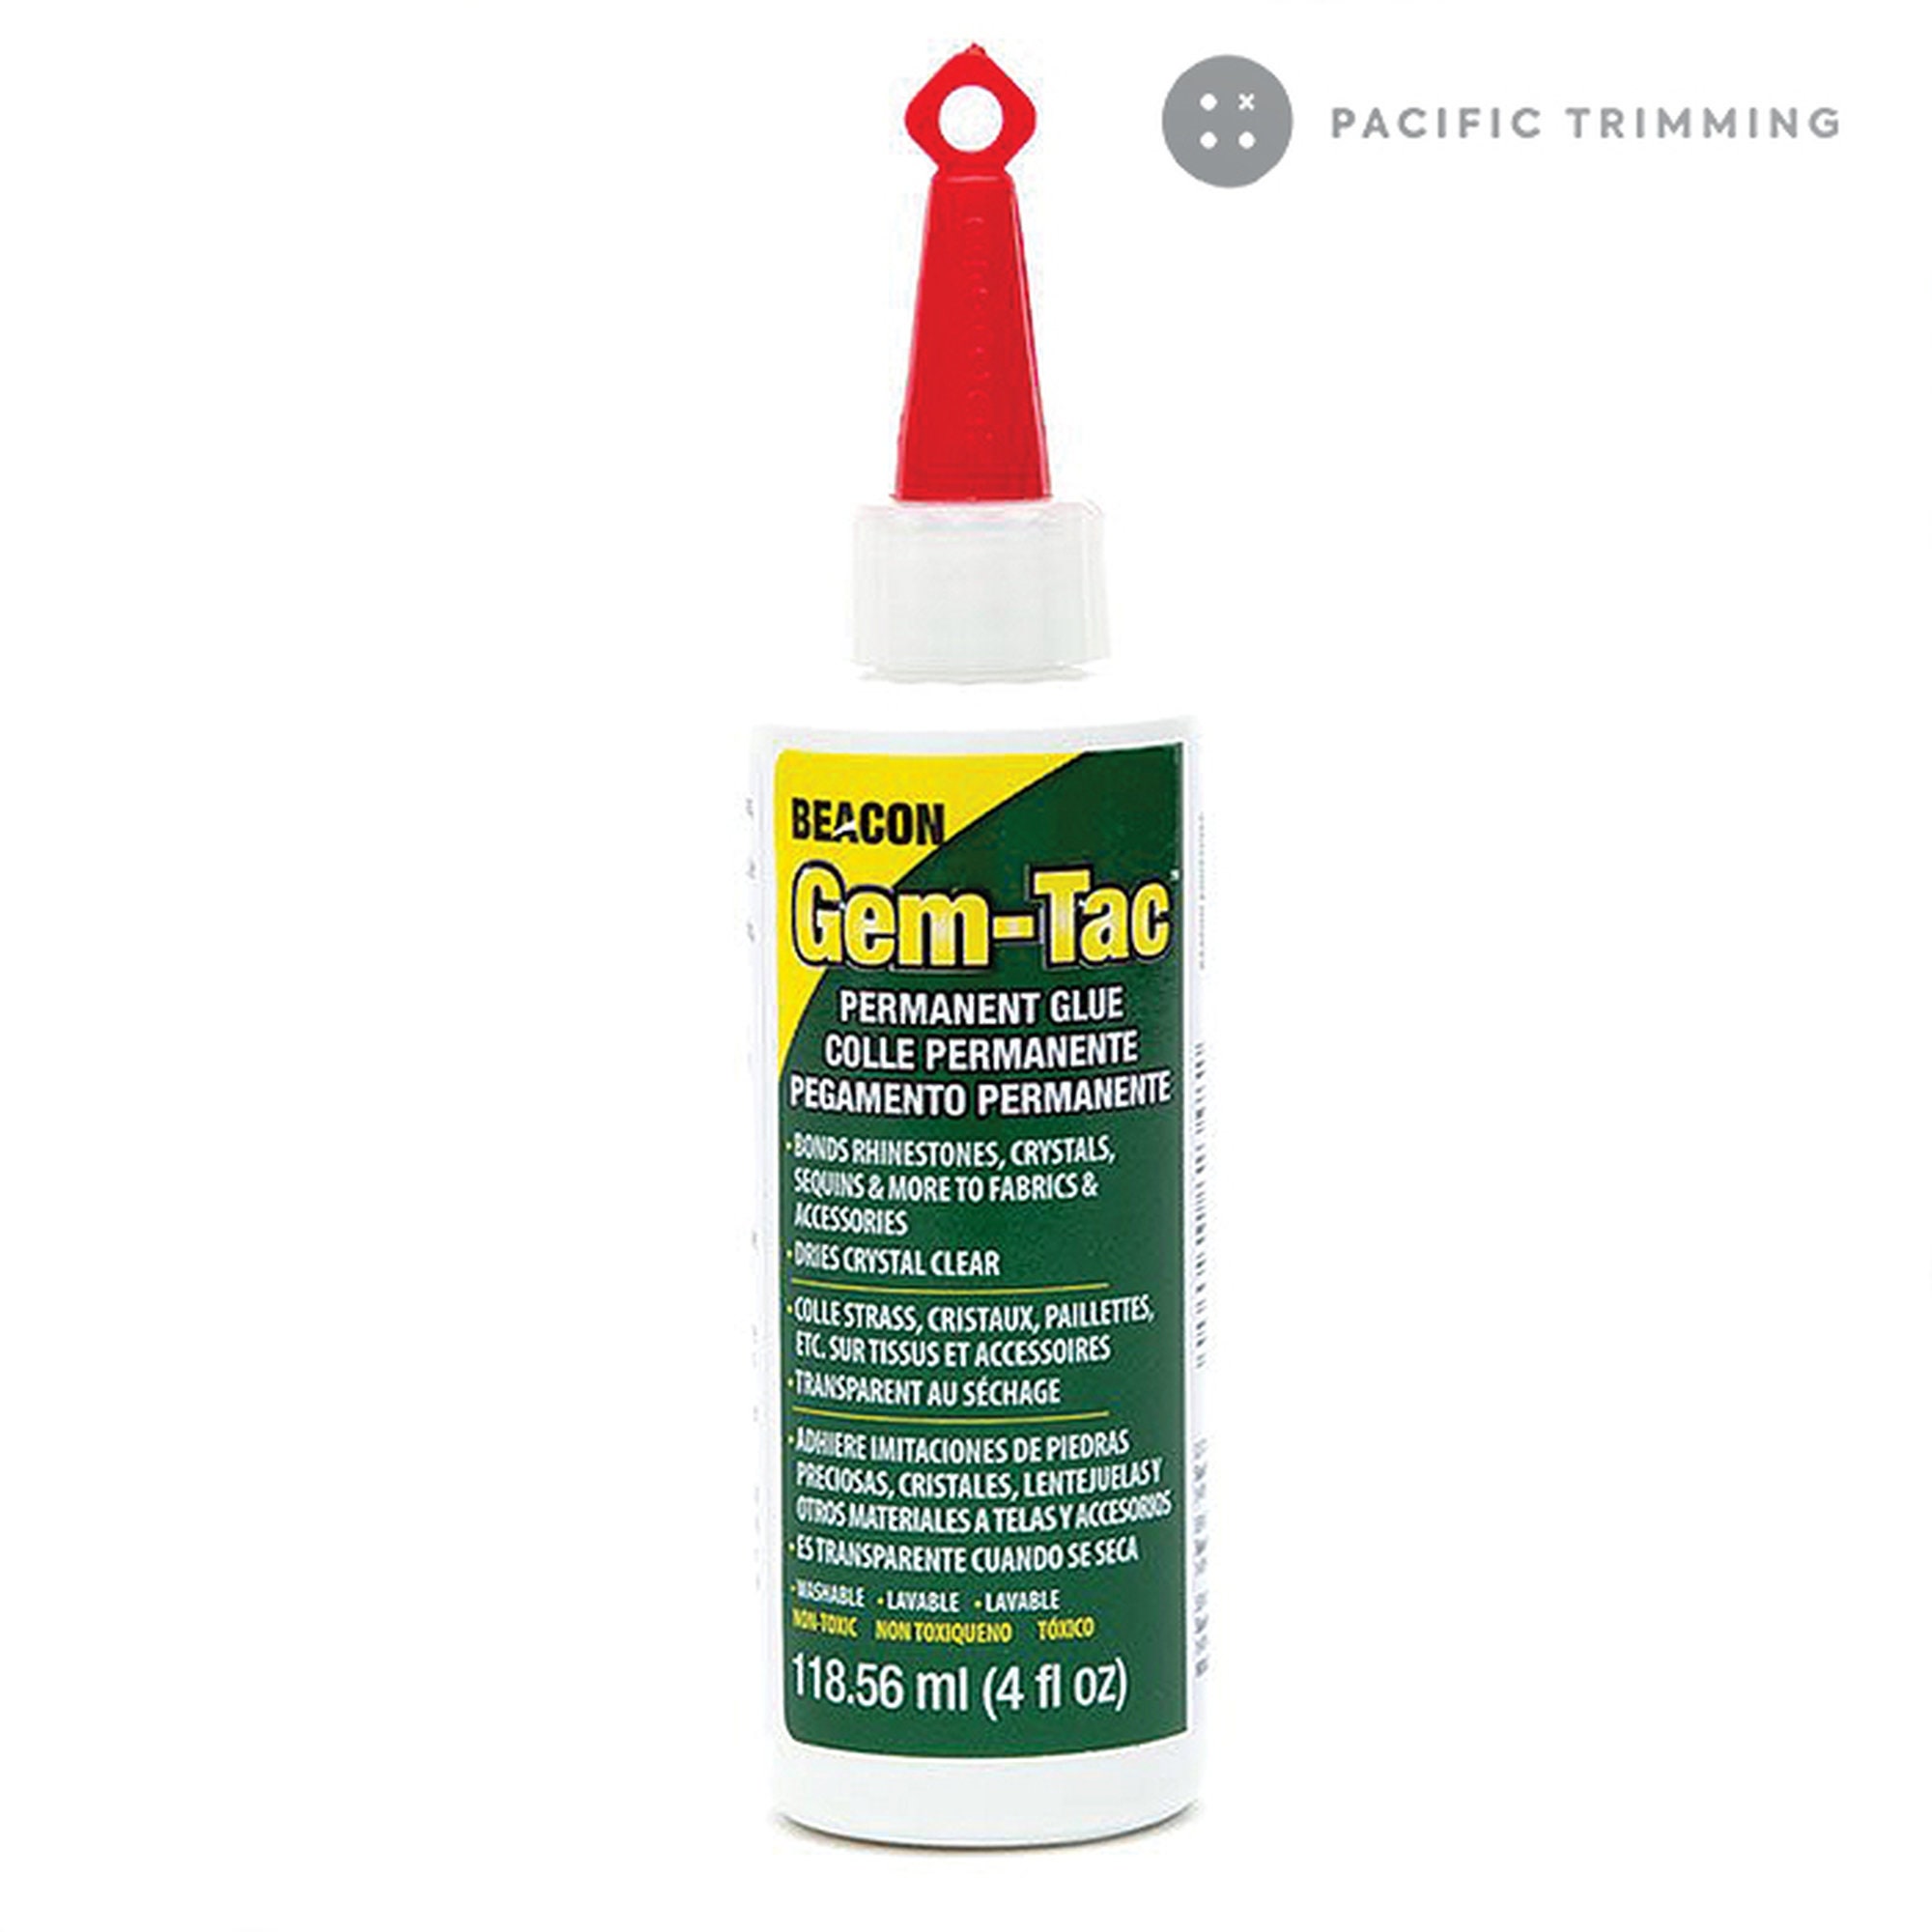 Fabri-Tac Permanent Adhesive-4 oz.